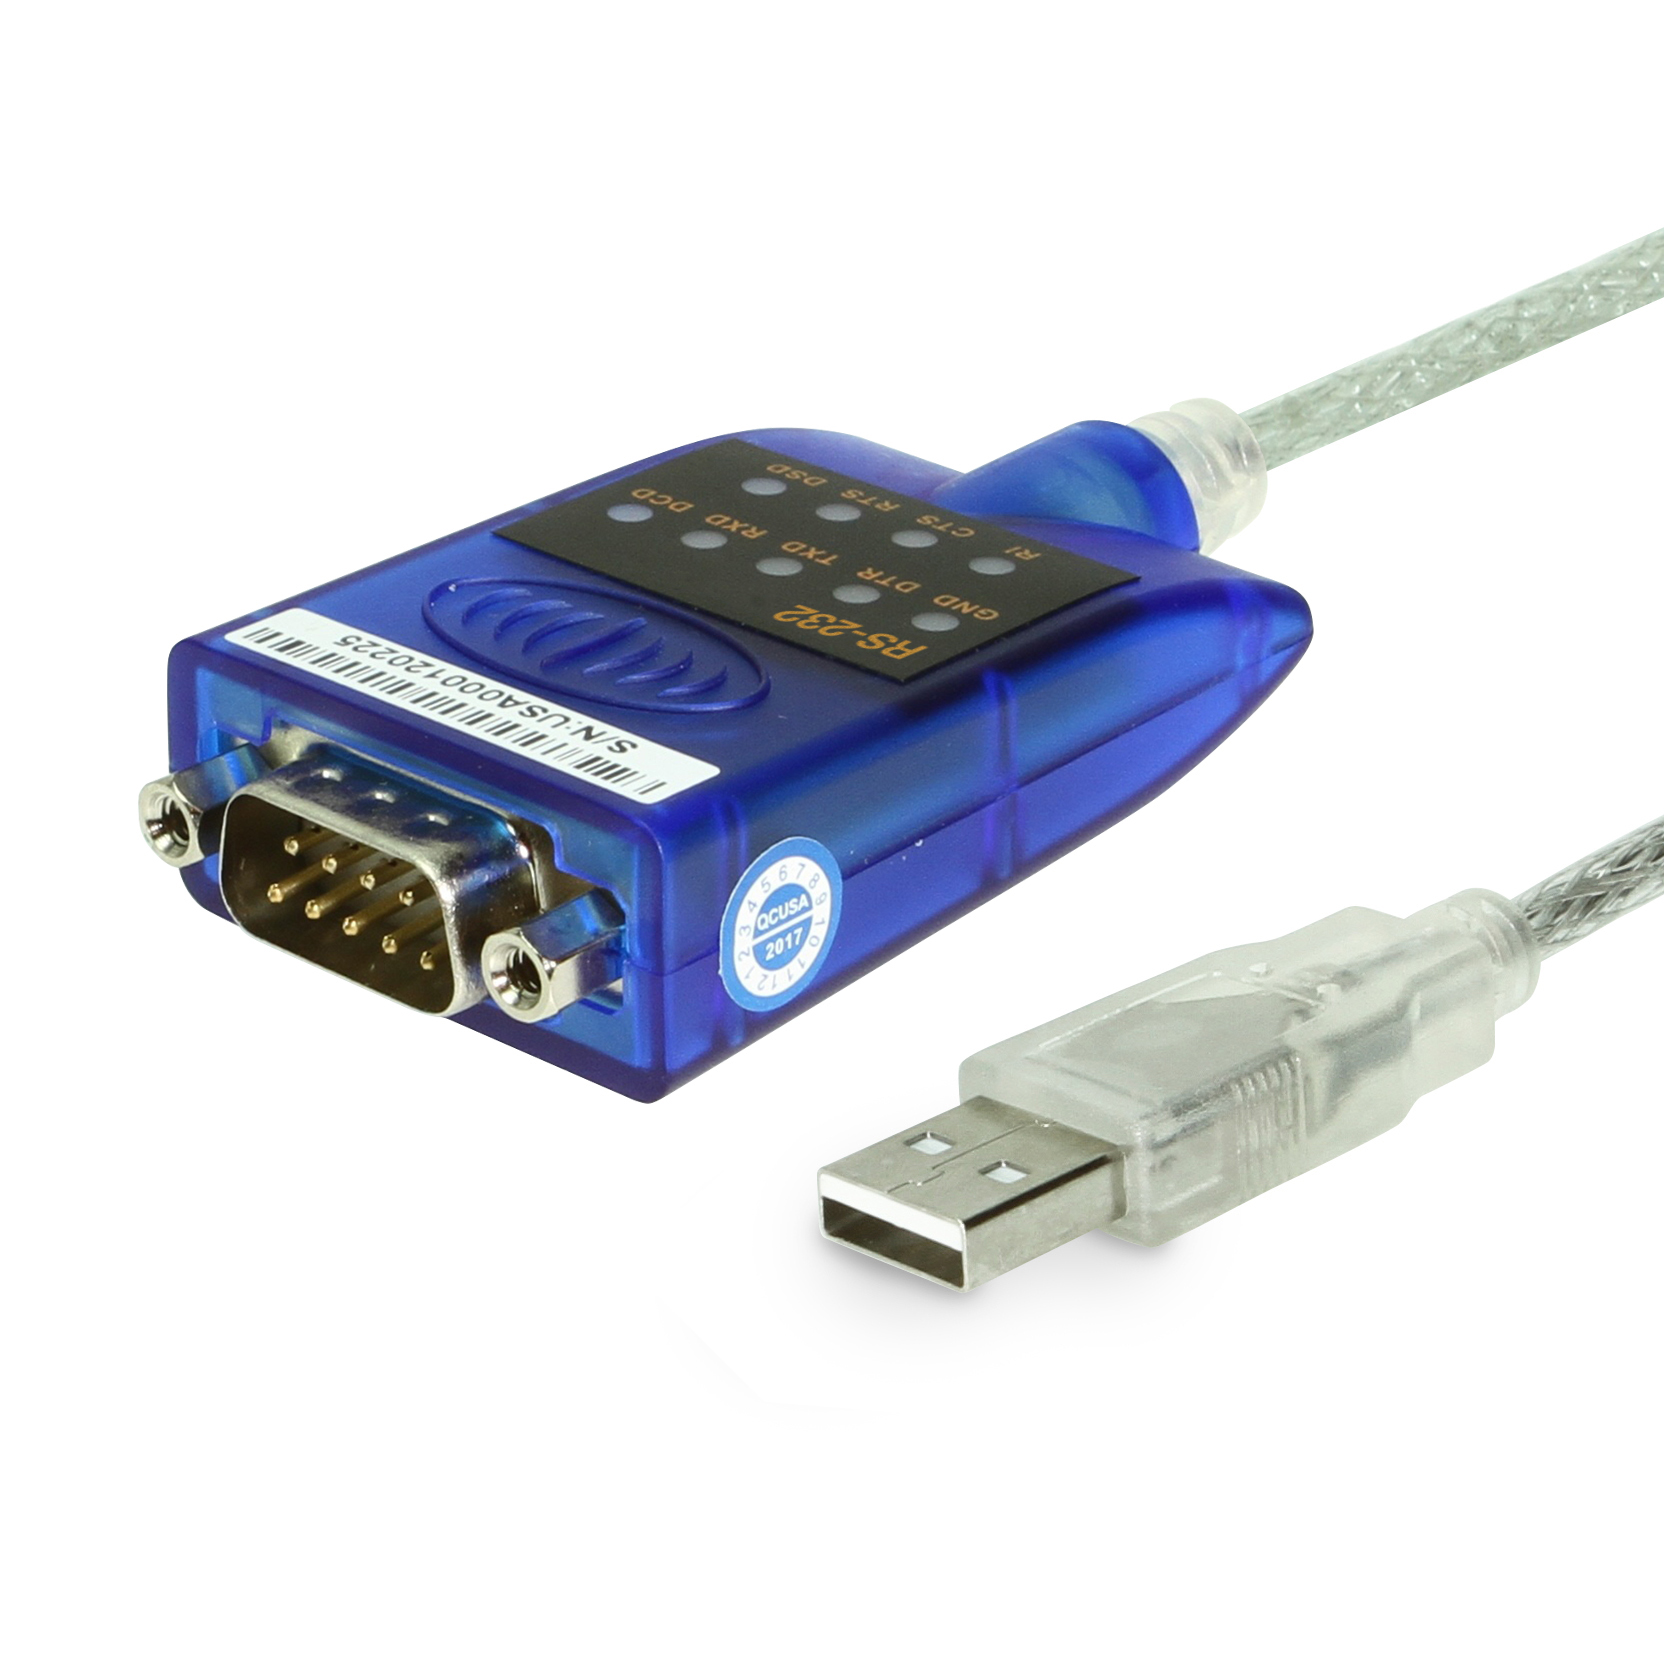 microfoon Somatische cel Zichzelf USB 2.0 RS-232 Serial Adapter with LED Indicators